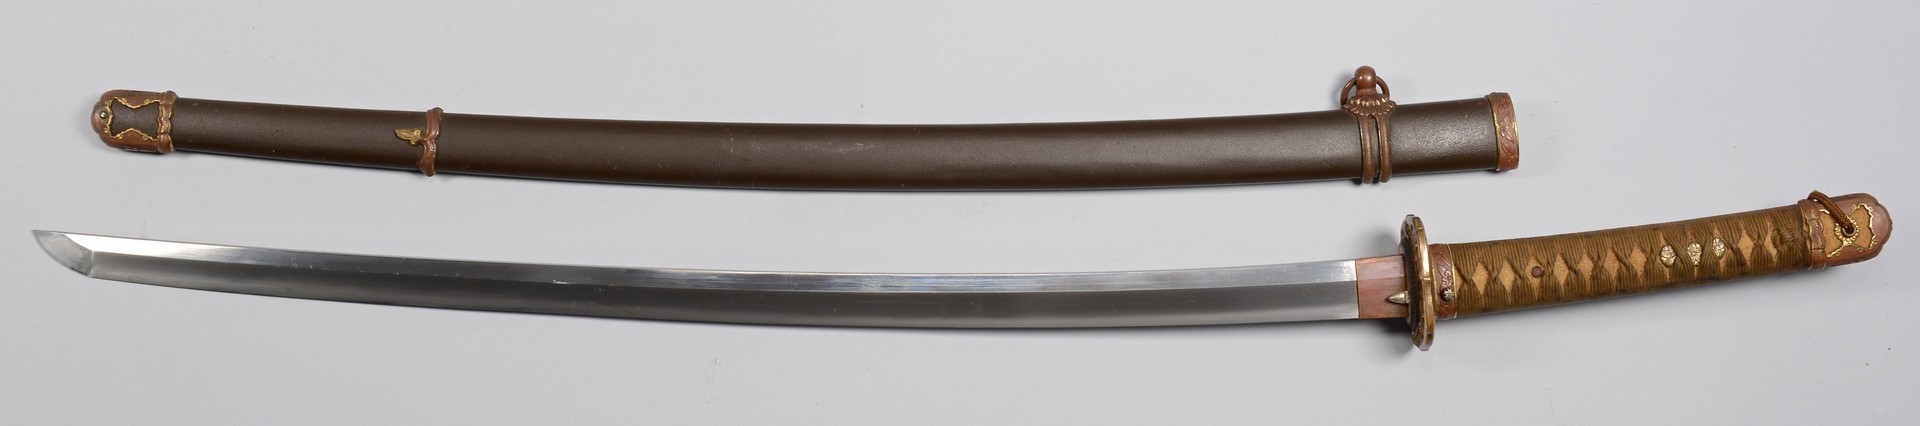 Lot 532: WWII Era Japanese Sword w/ Bronze Mounts